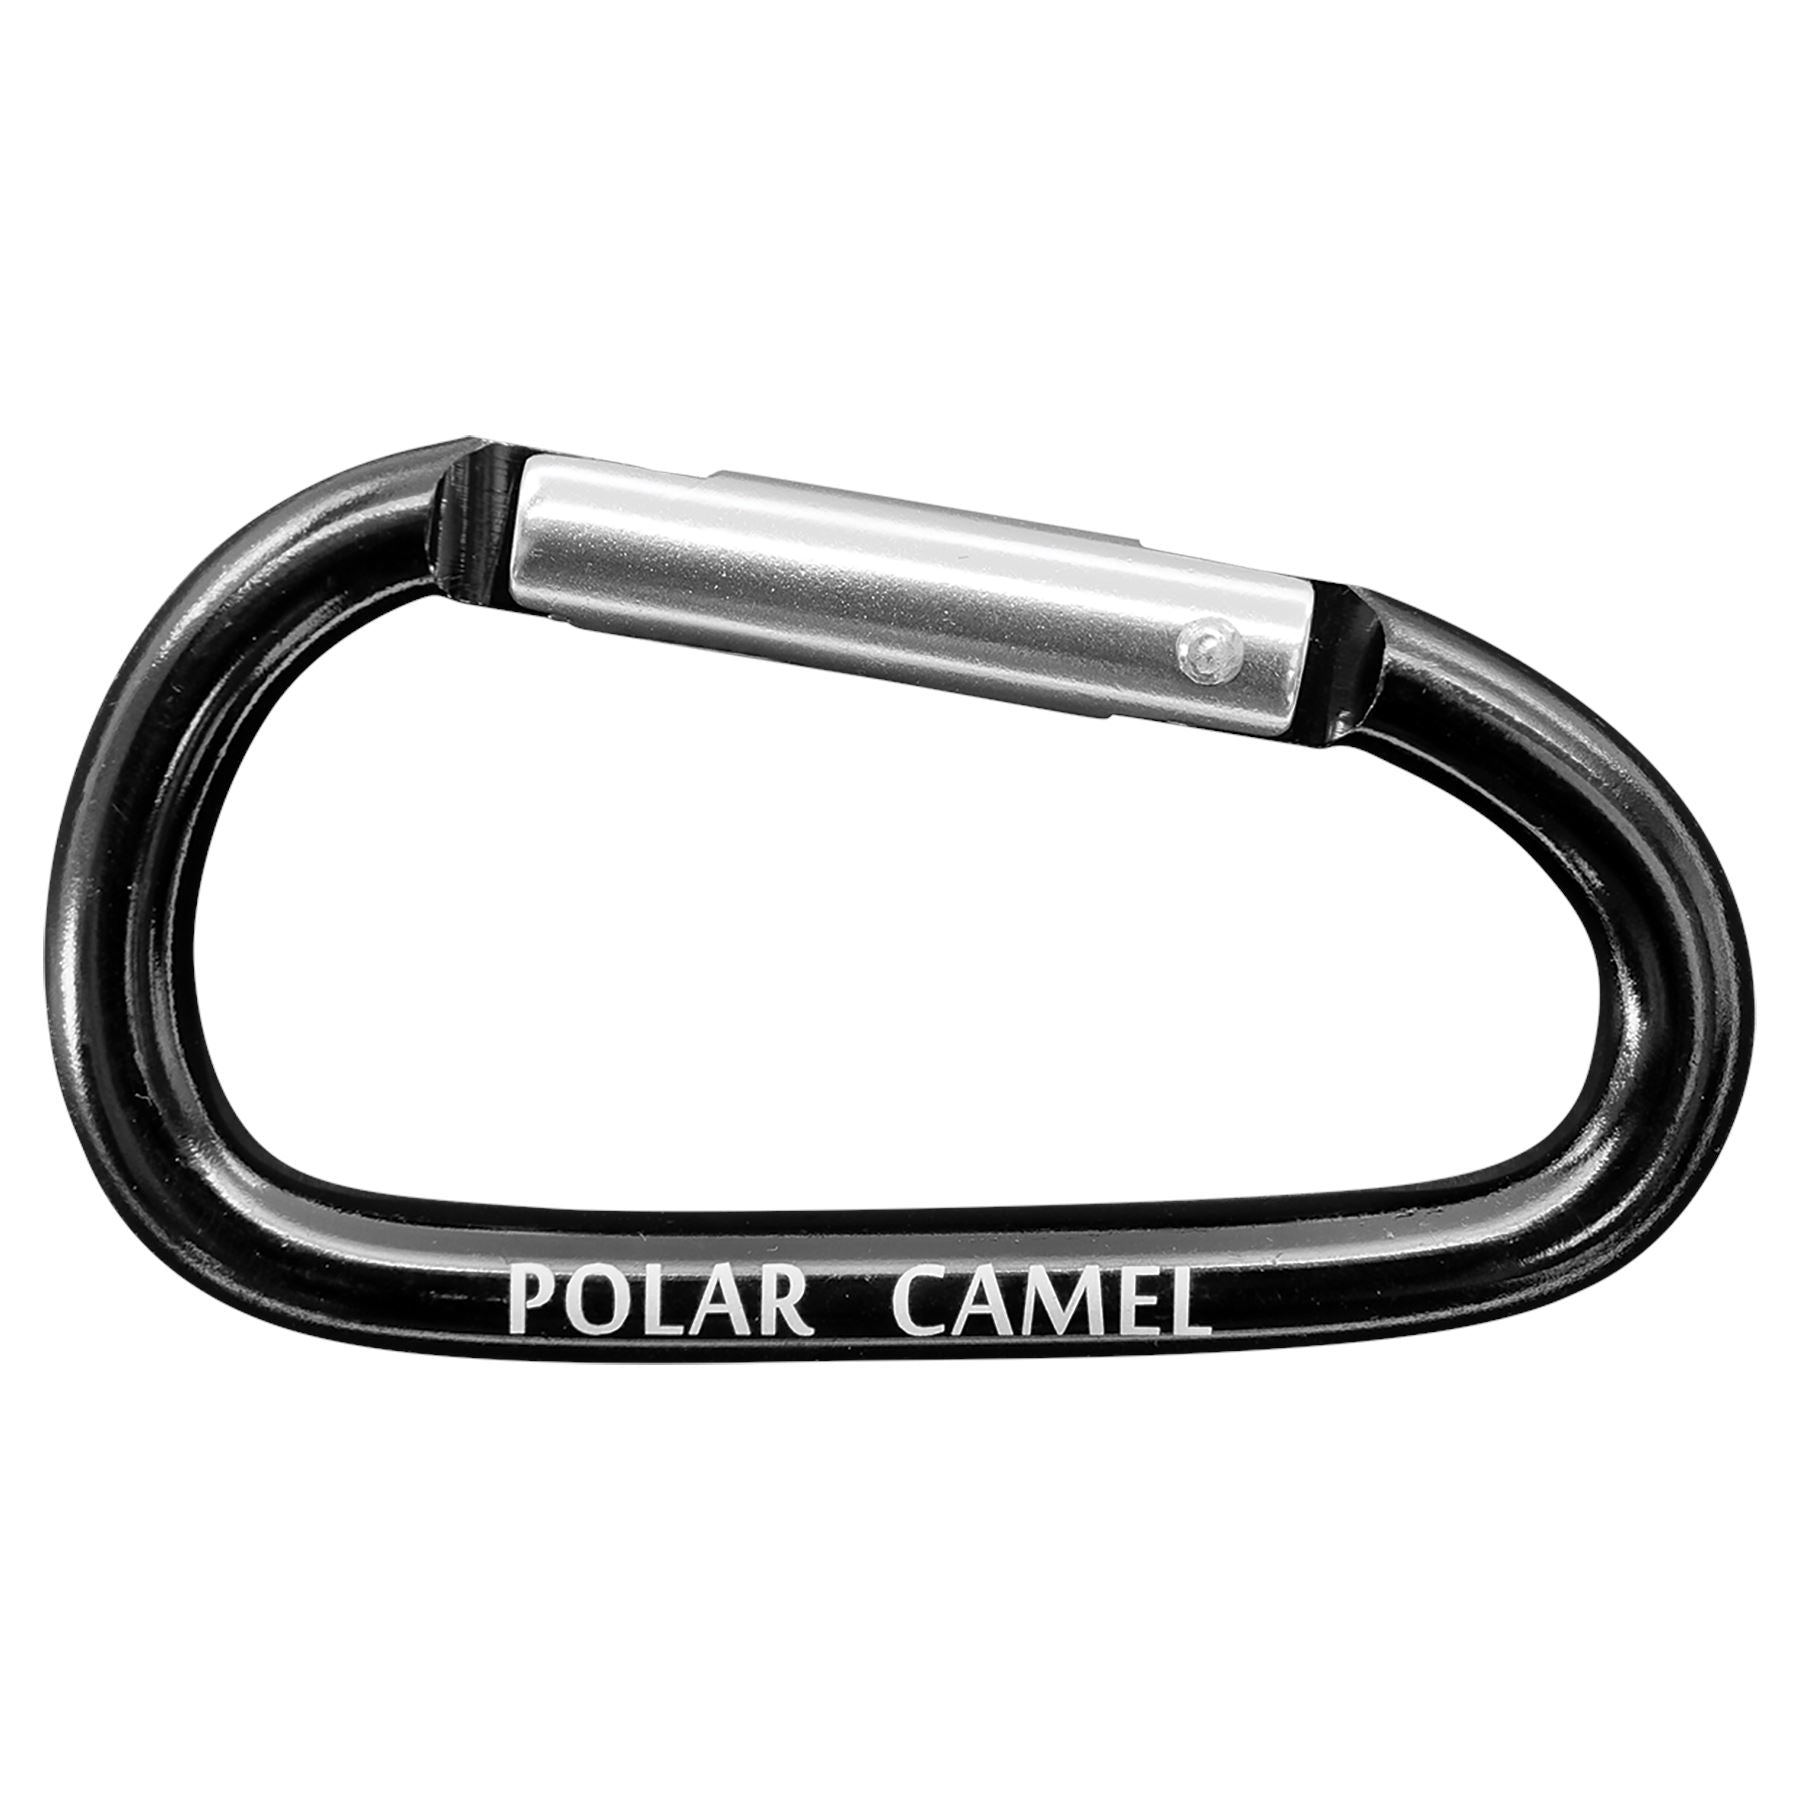 Polar Camel Water Bottle Carabiner - Craftworks NW, LLC